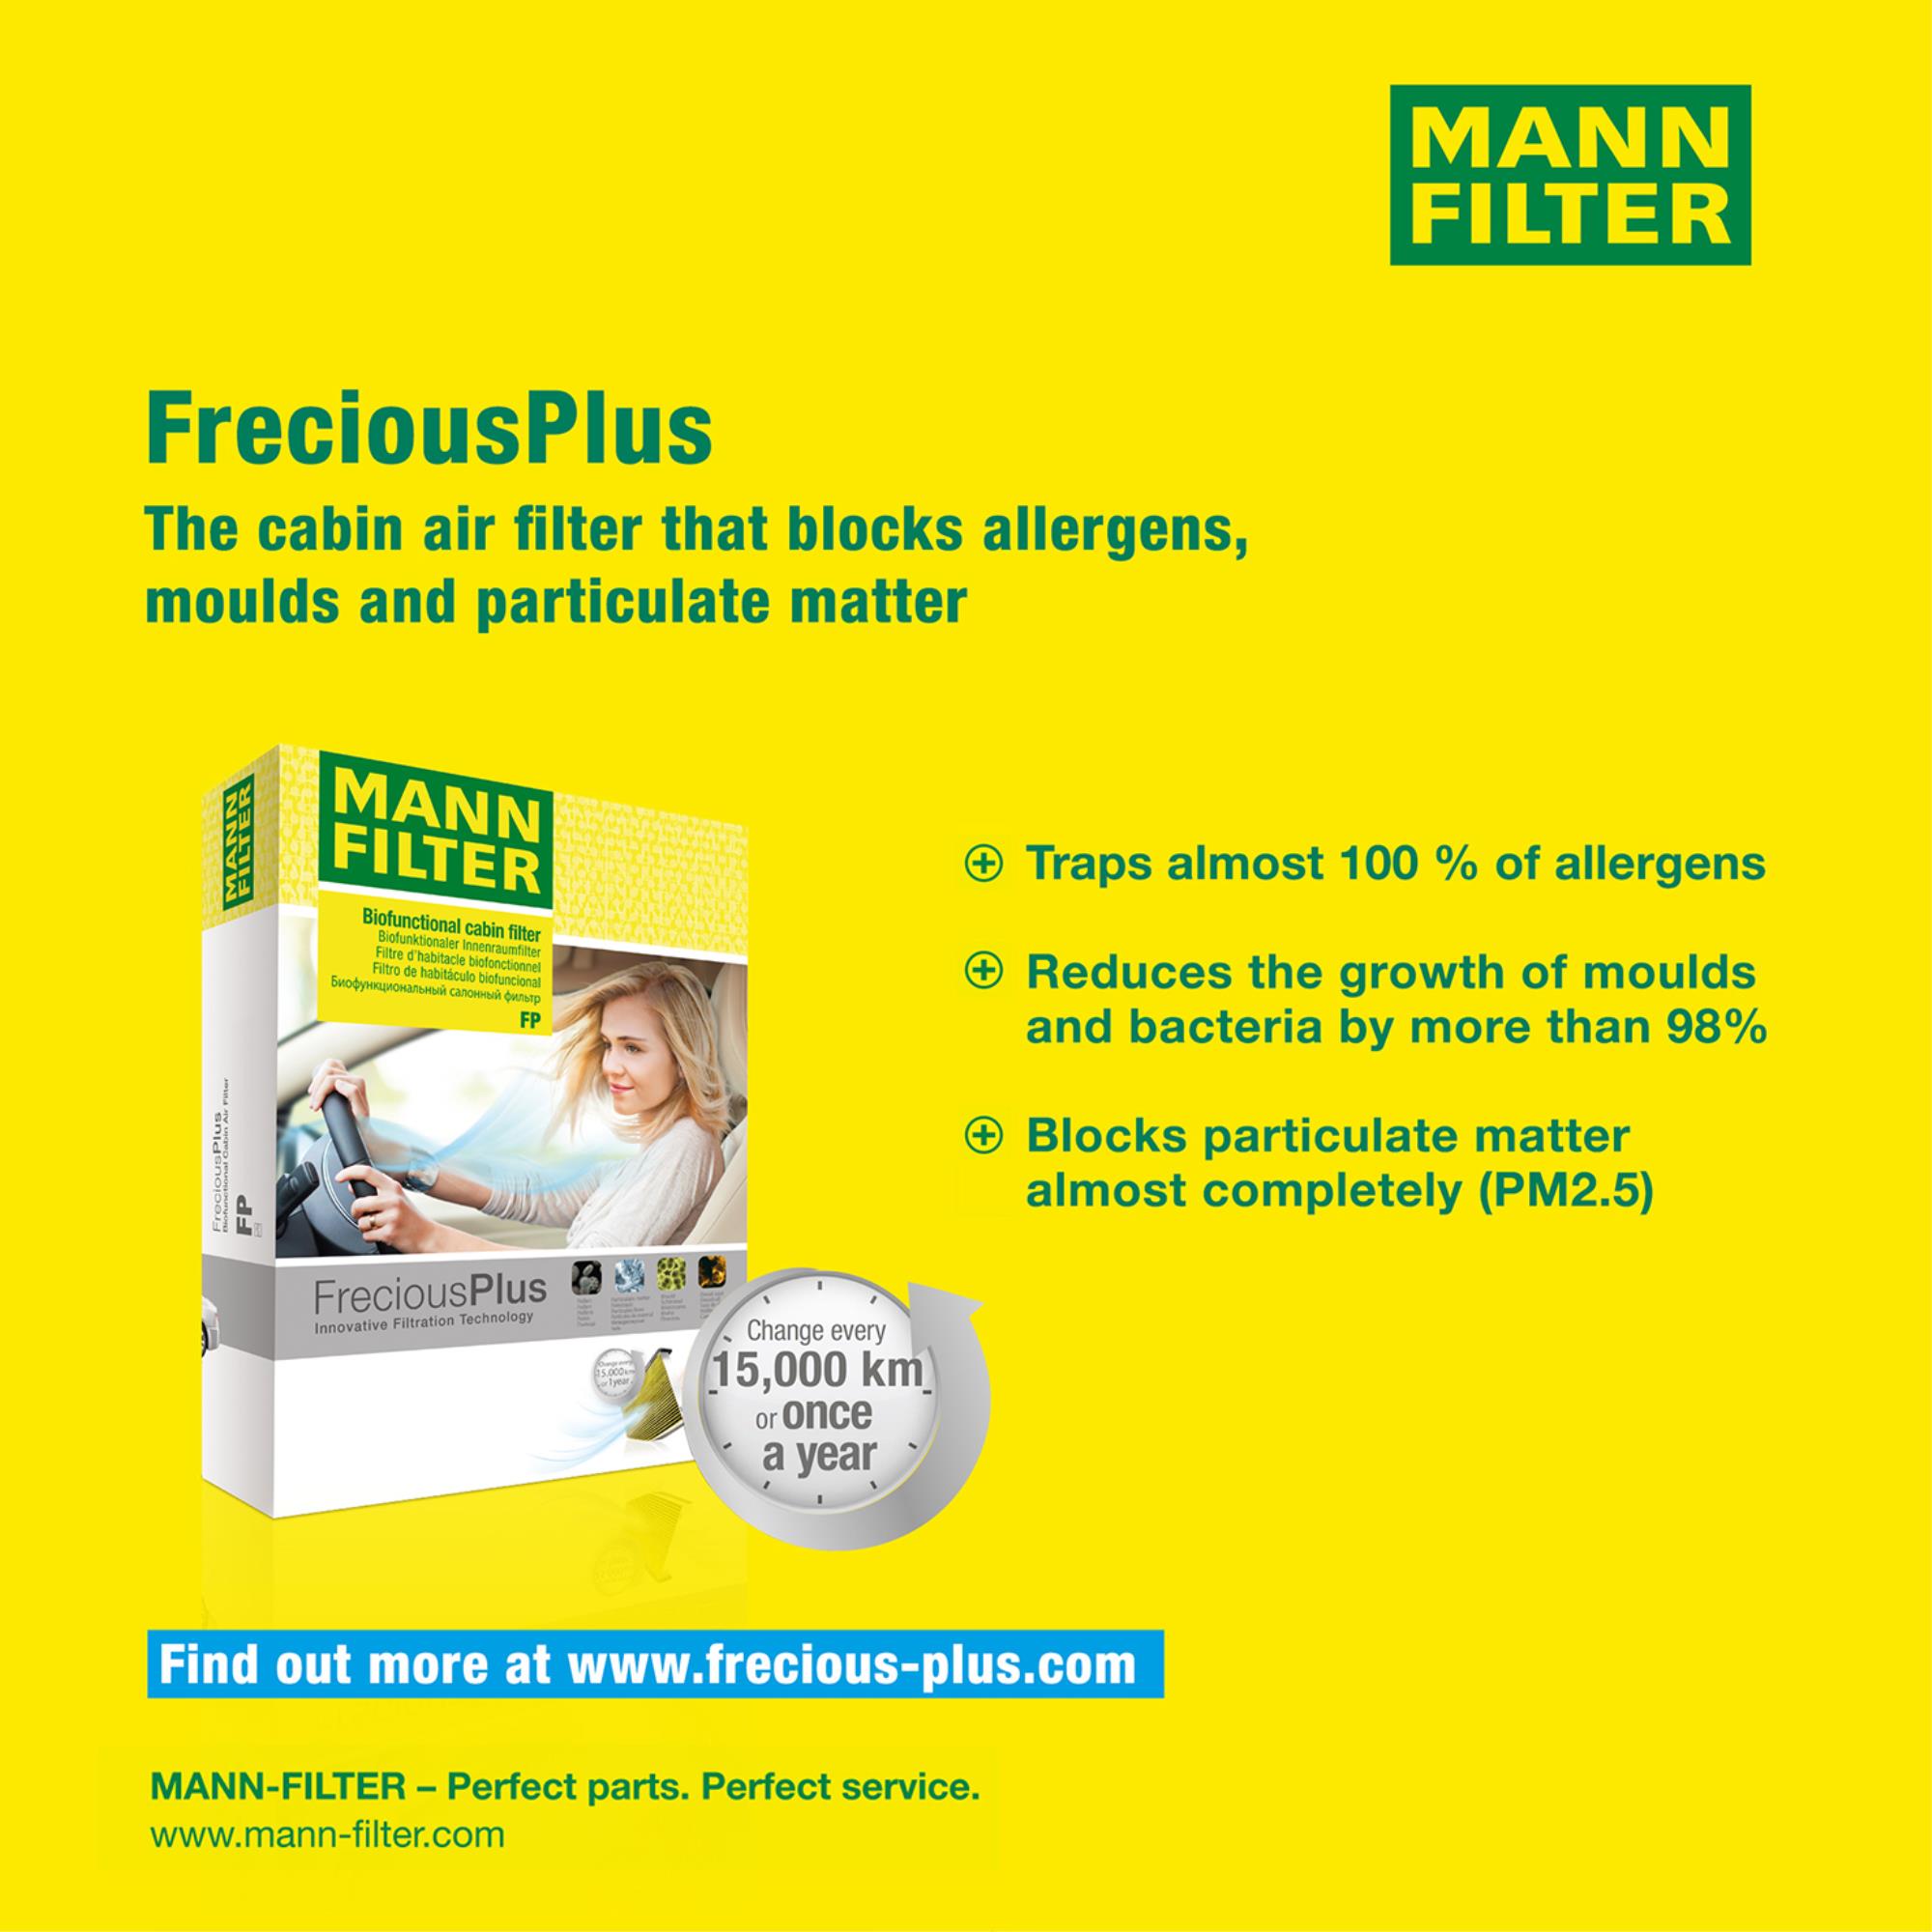 MANN-Filter Innenraumfilter Biofunctional für Allergiker FP 2882